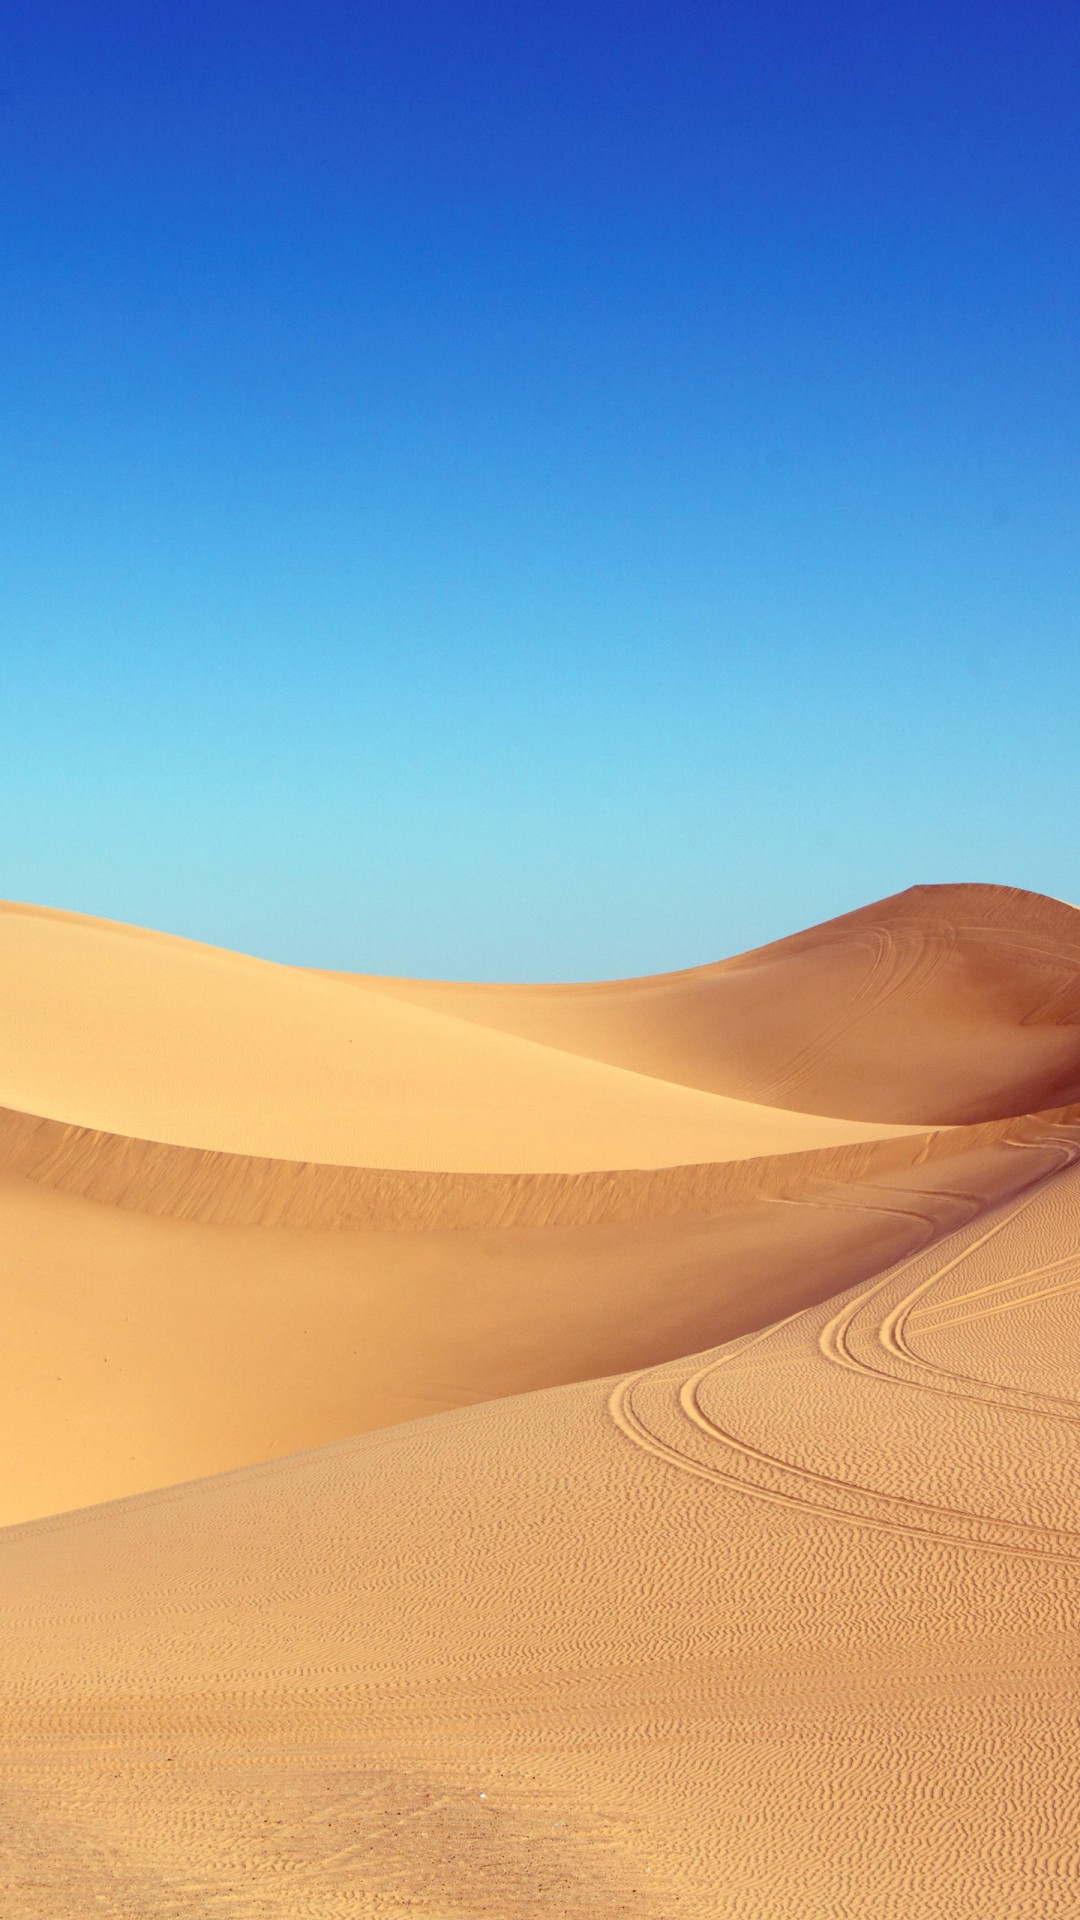 Blue sky and desert dunes wallpaper 1080x1920